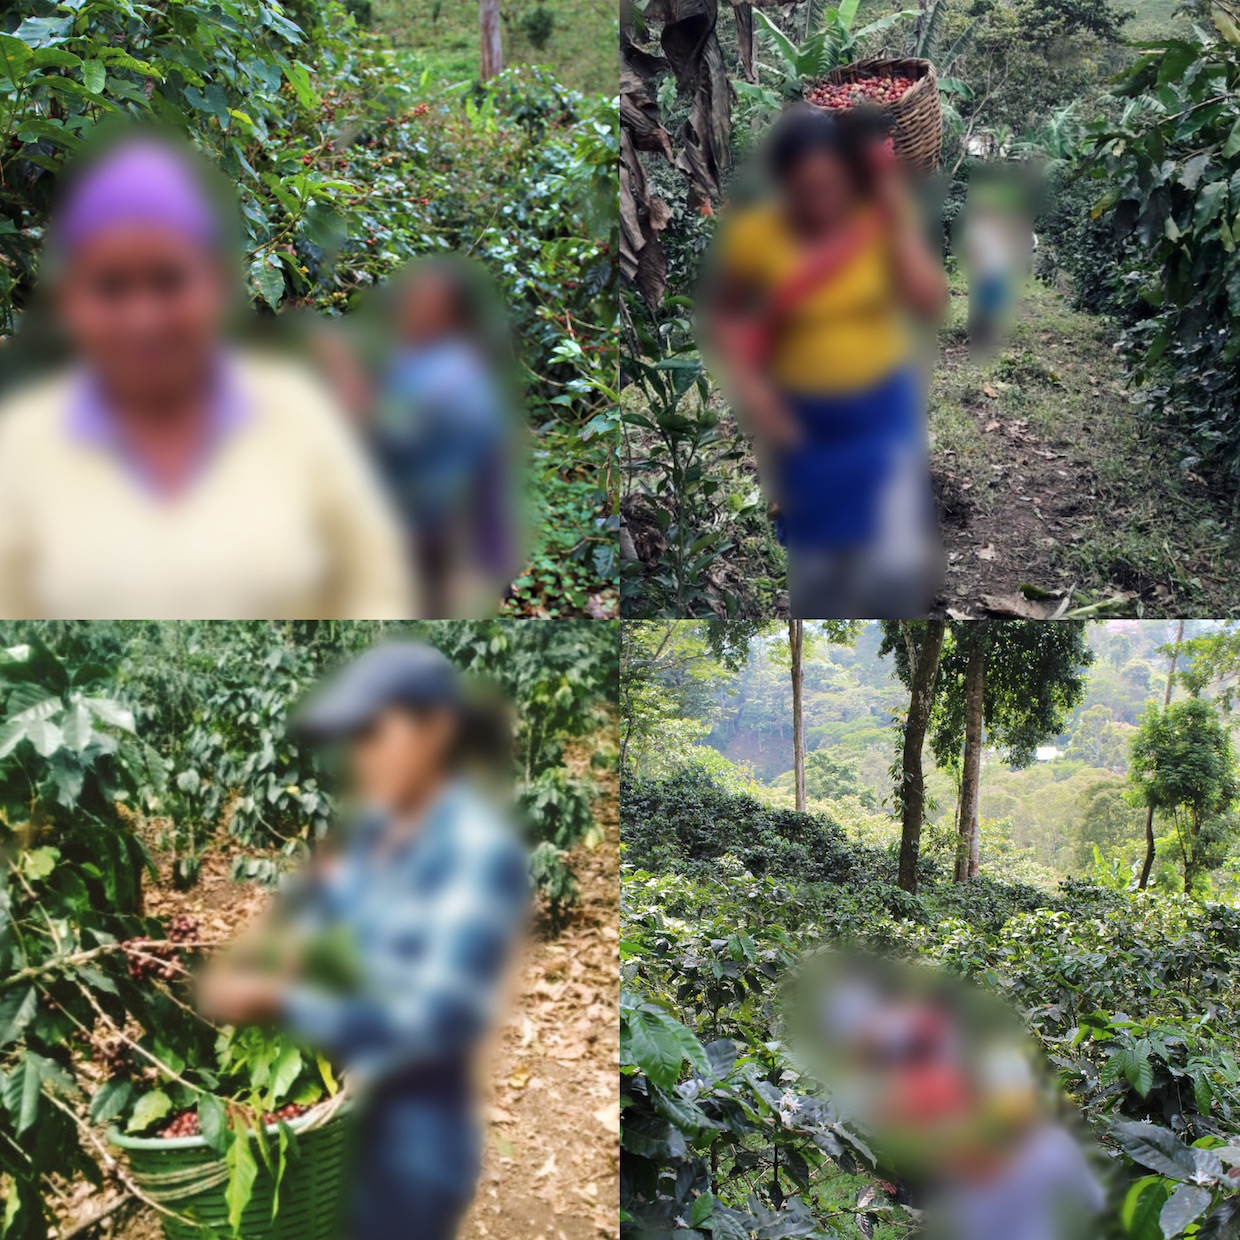 coffee farmers